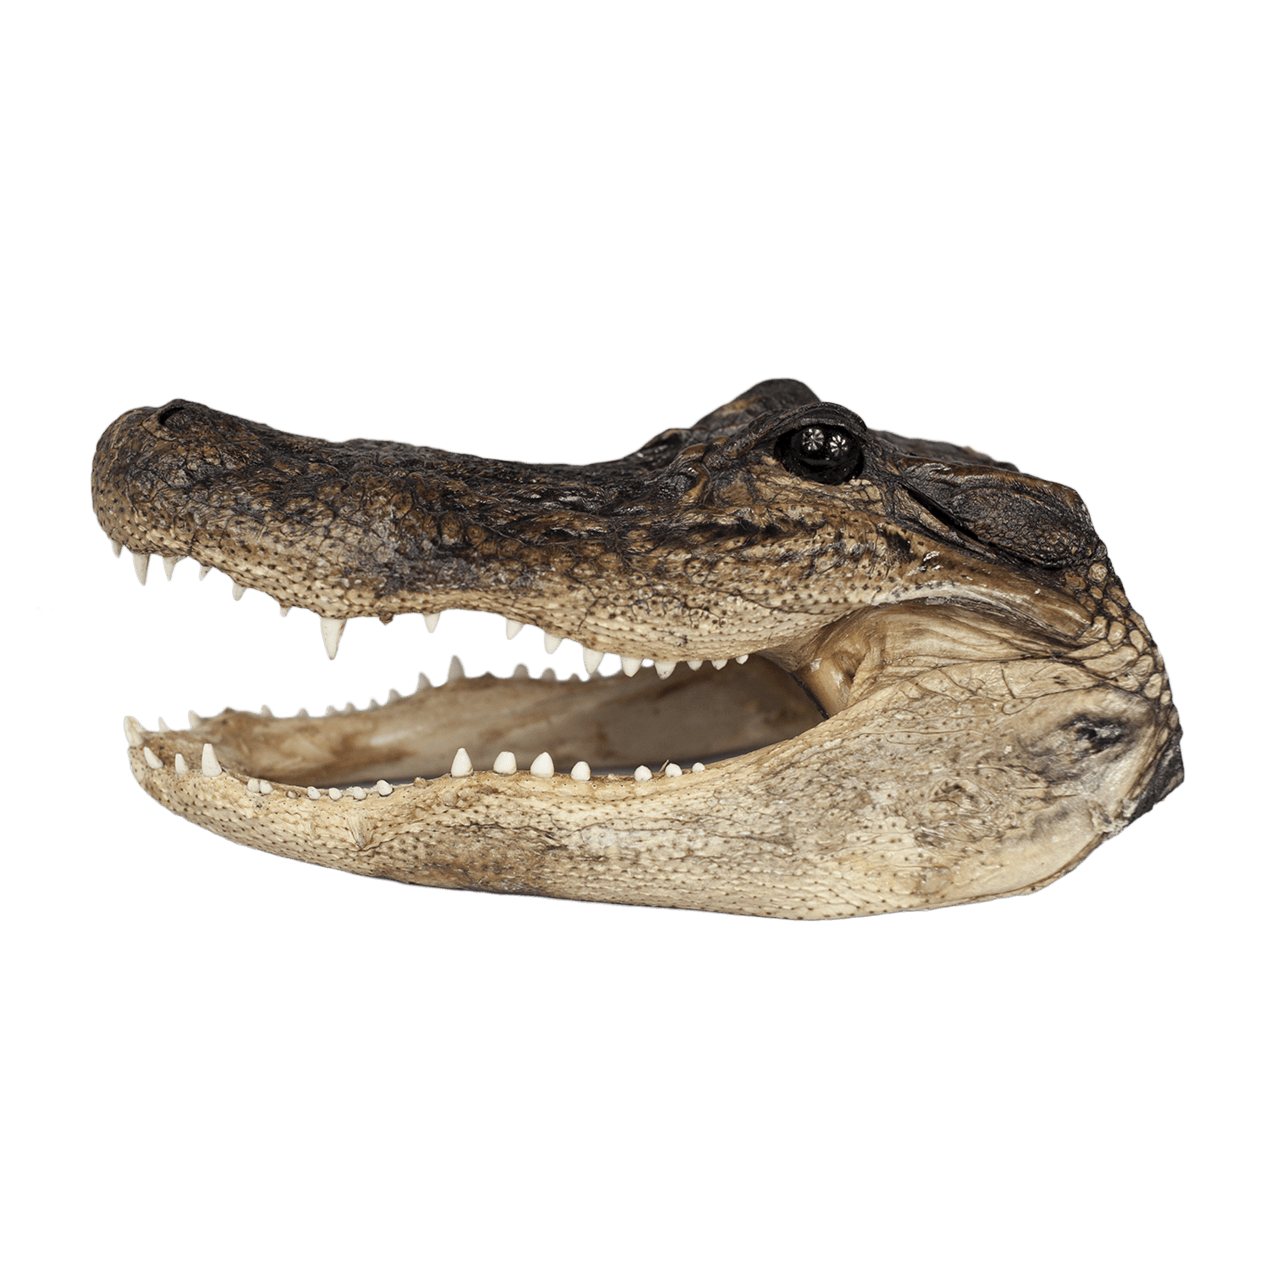 XL Gator Head - 3 Sizes - 13" to 16"